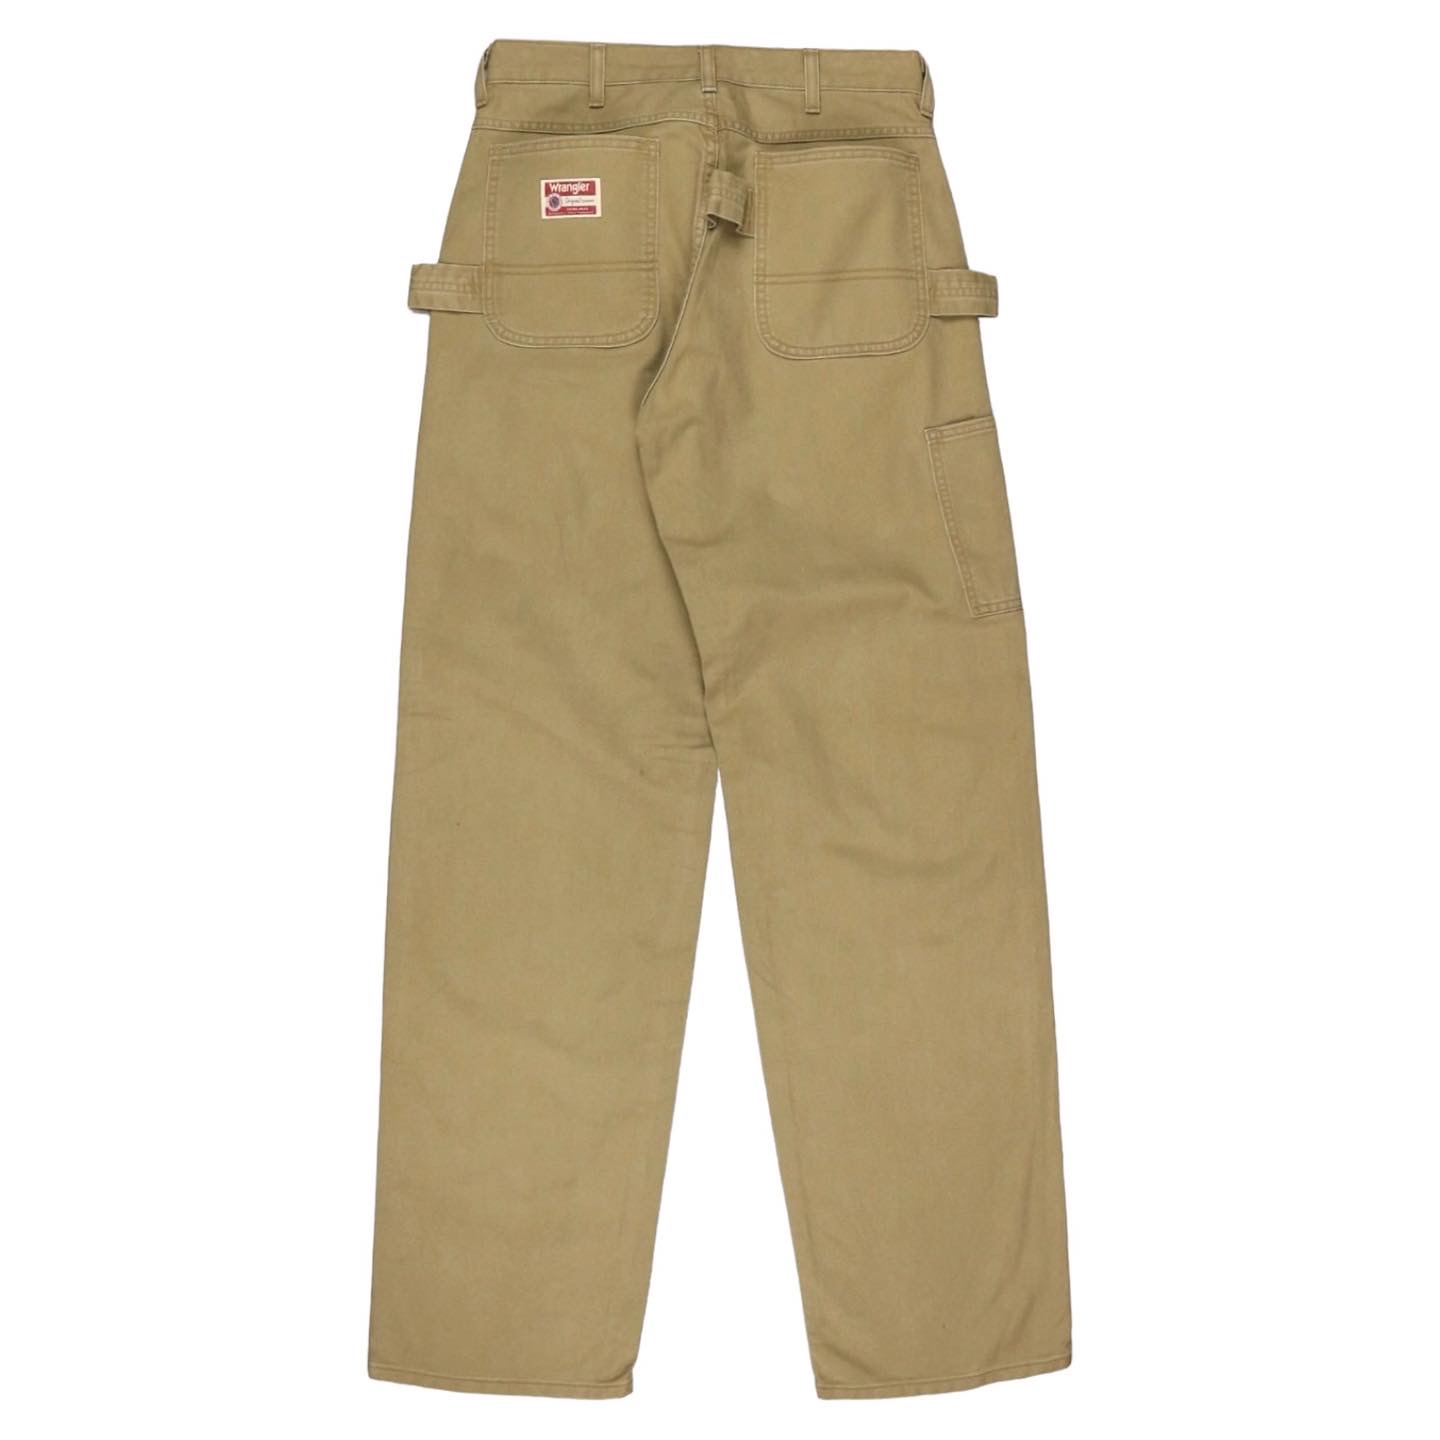 Wrangler Carpenter Pants Size 26